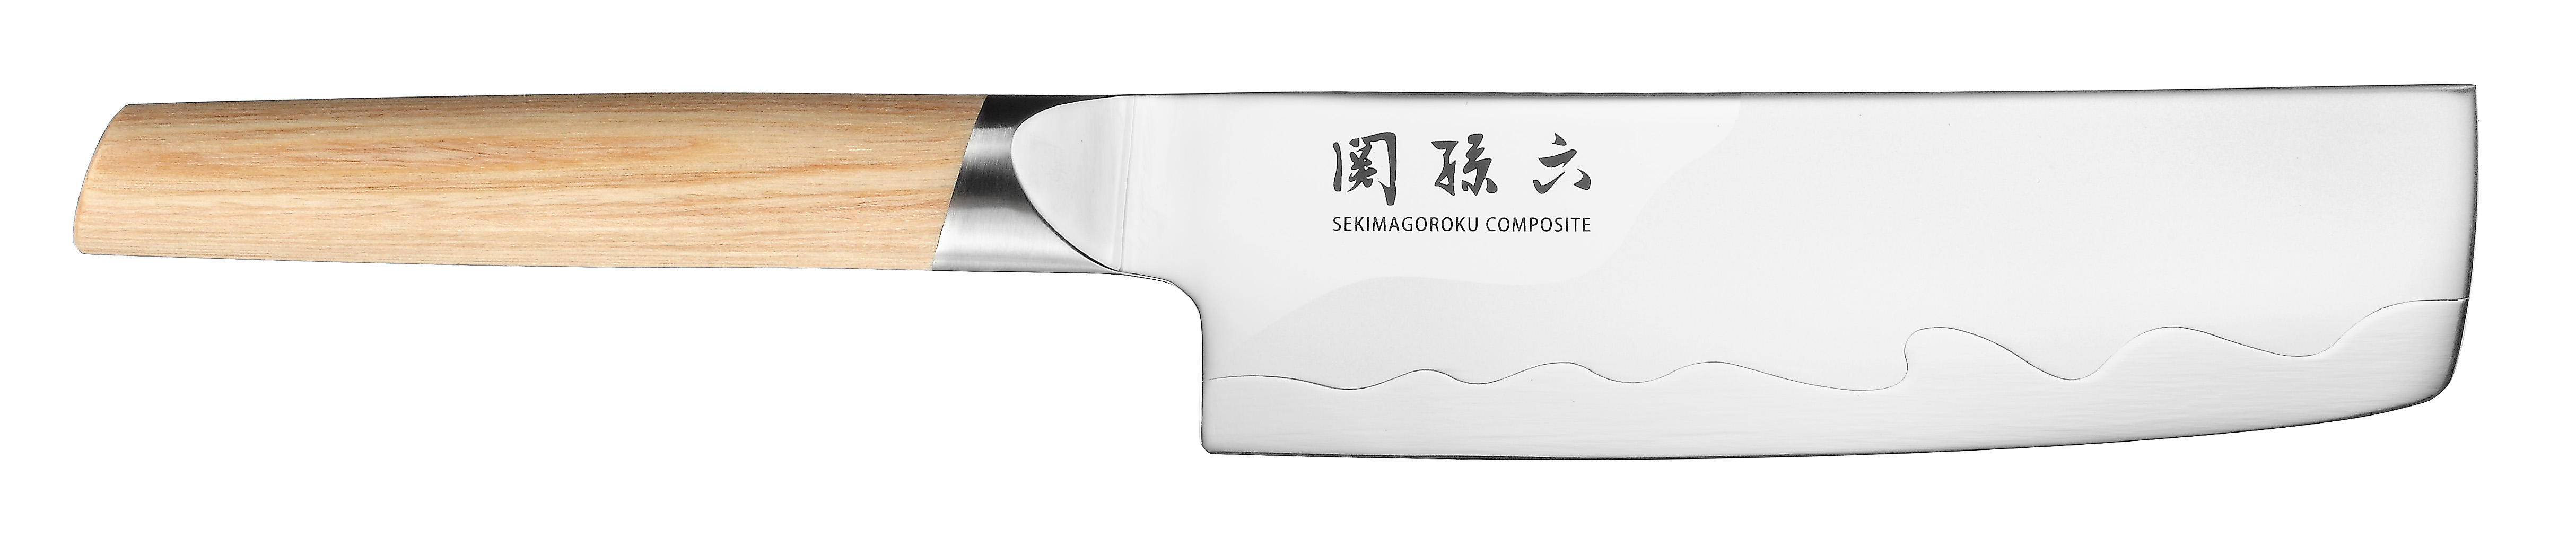 KAI SEKI MAGOROKU COMPOSITE MGC-0428